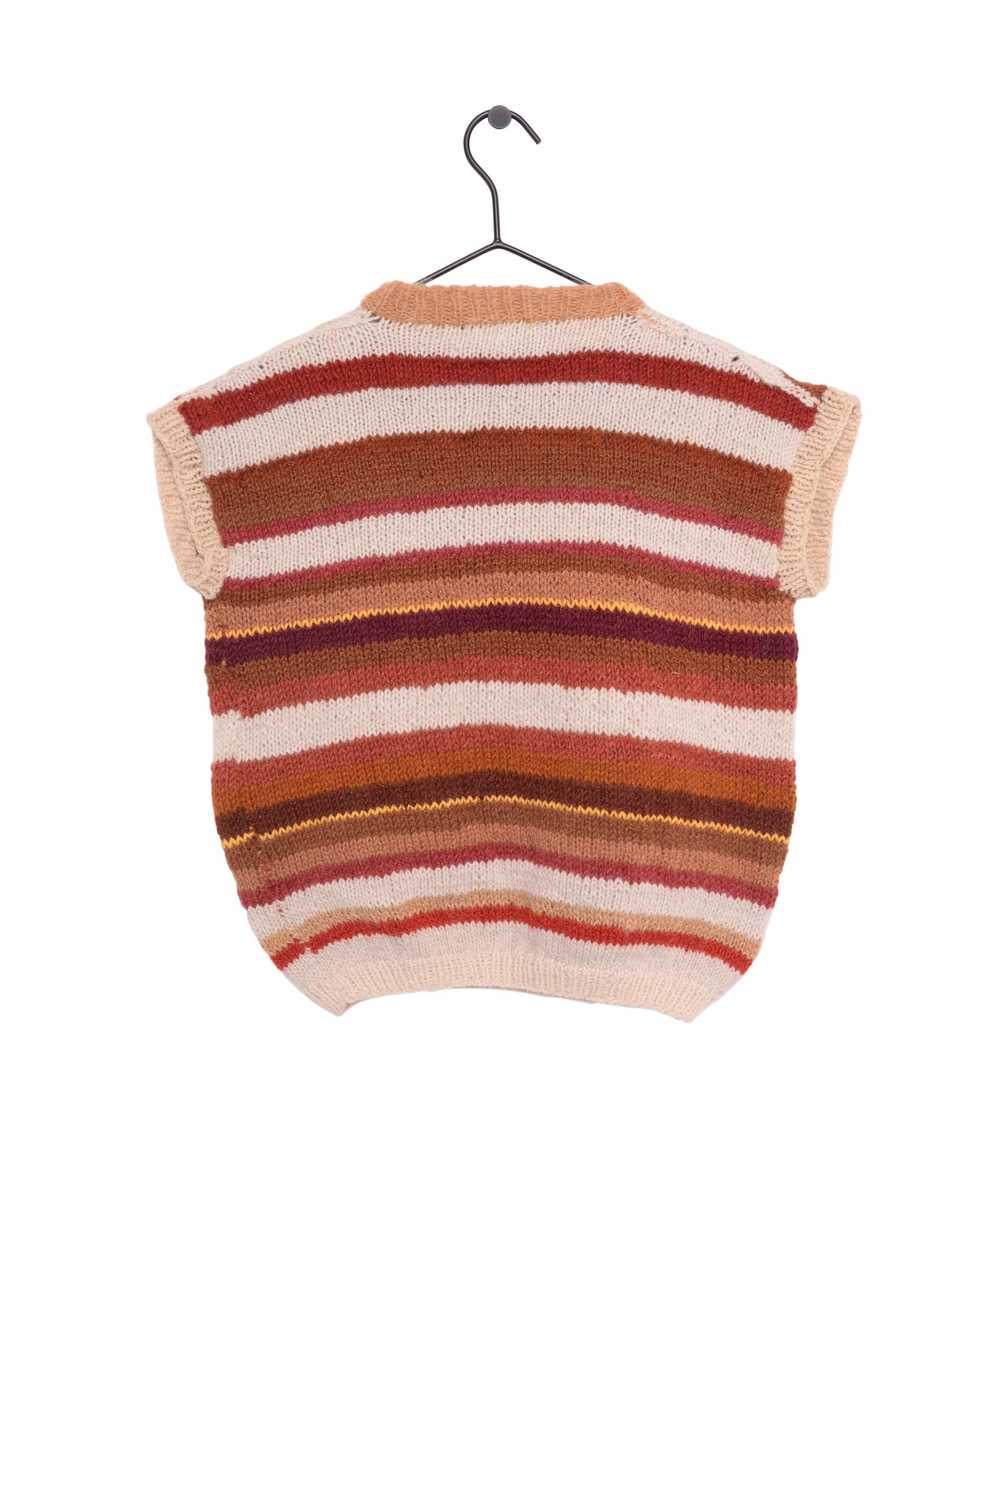 Striped Sweater Vest - image 2